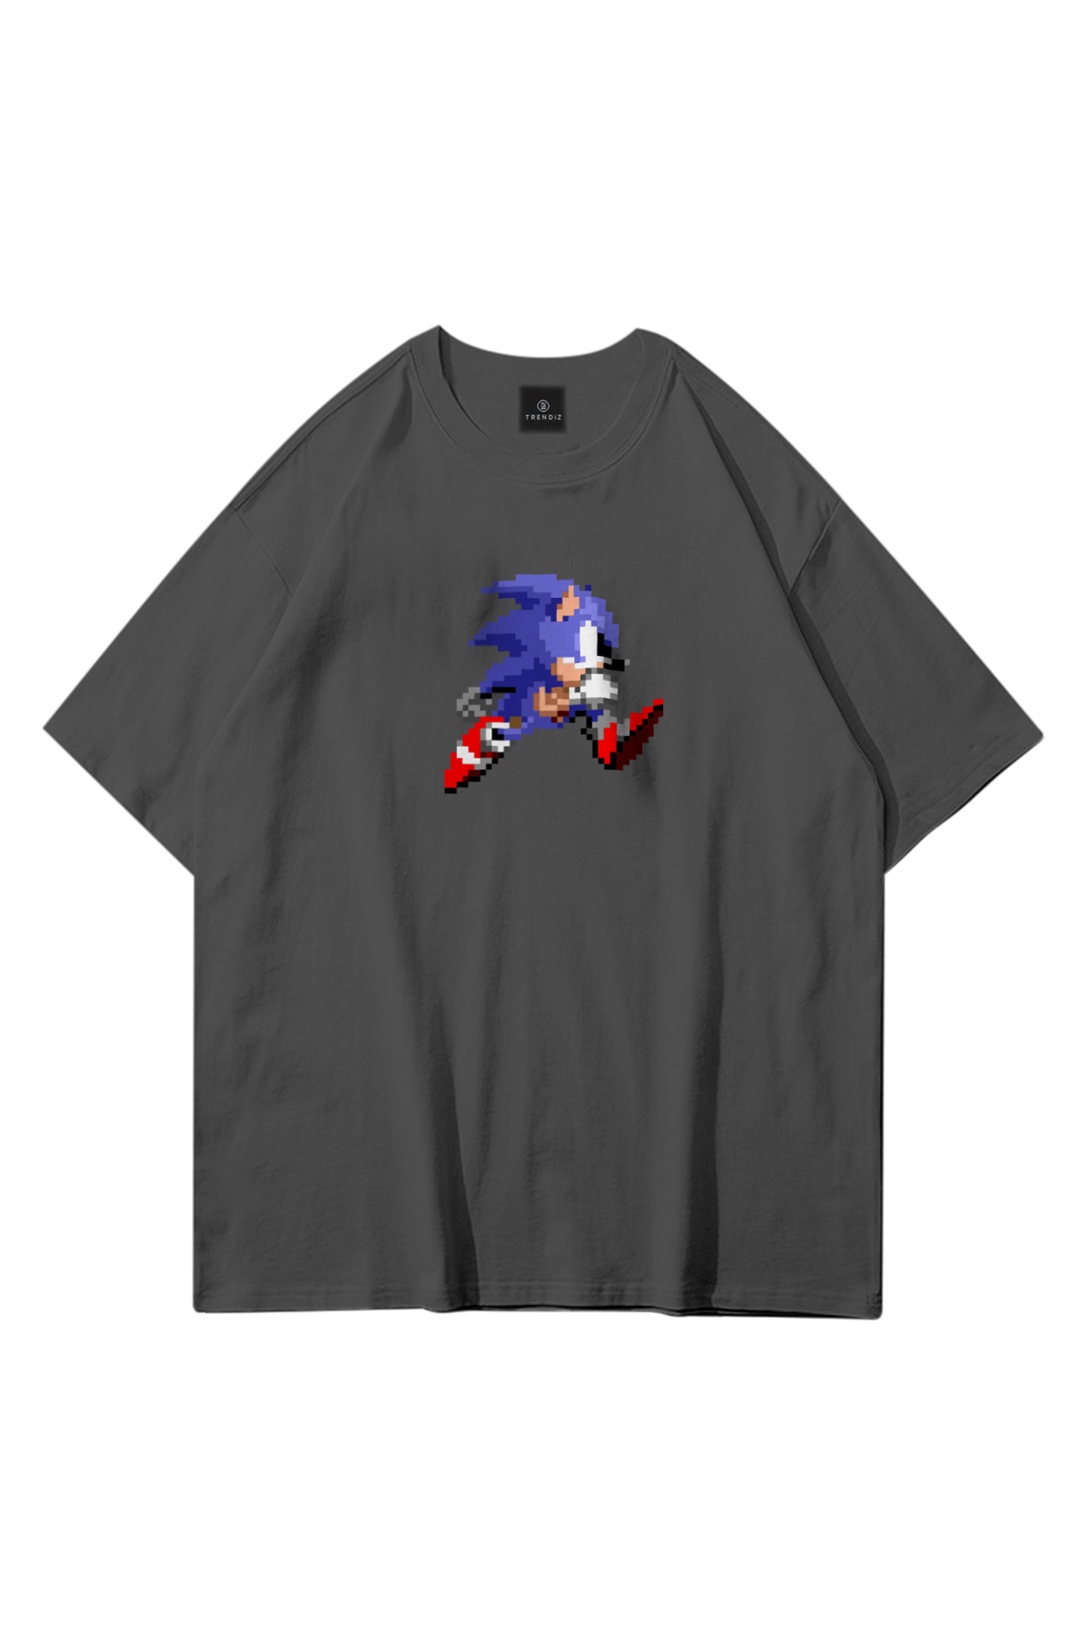 Trendiz Unisex Sonic the Hedgehog Antrasit Tshirt